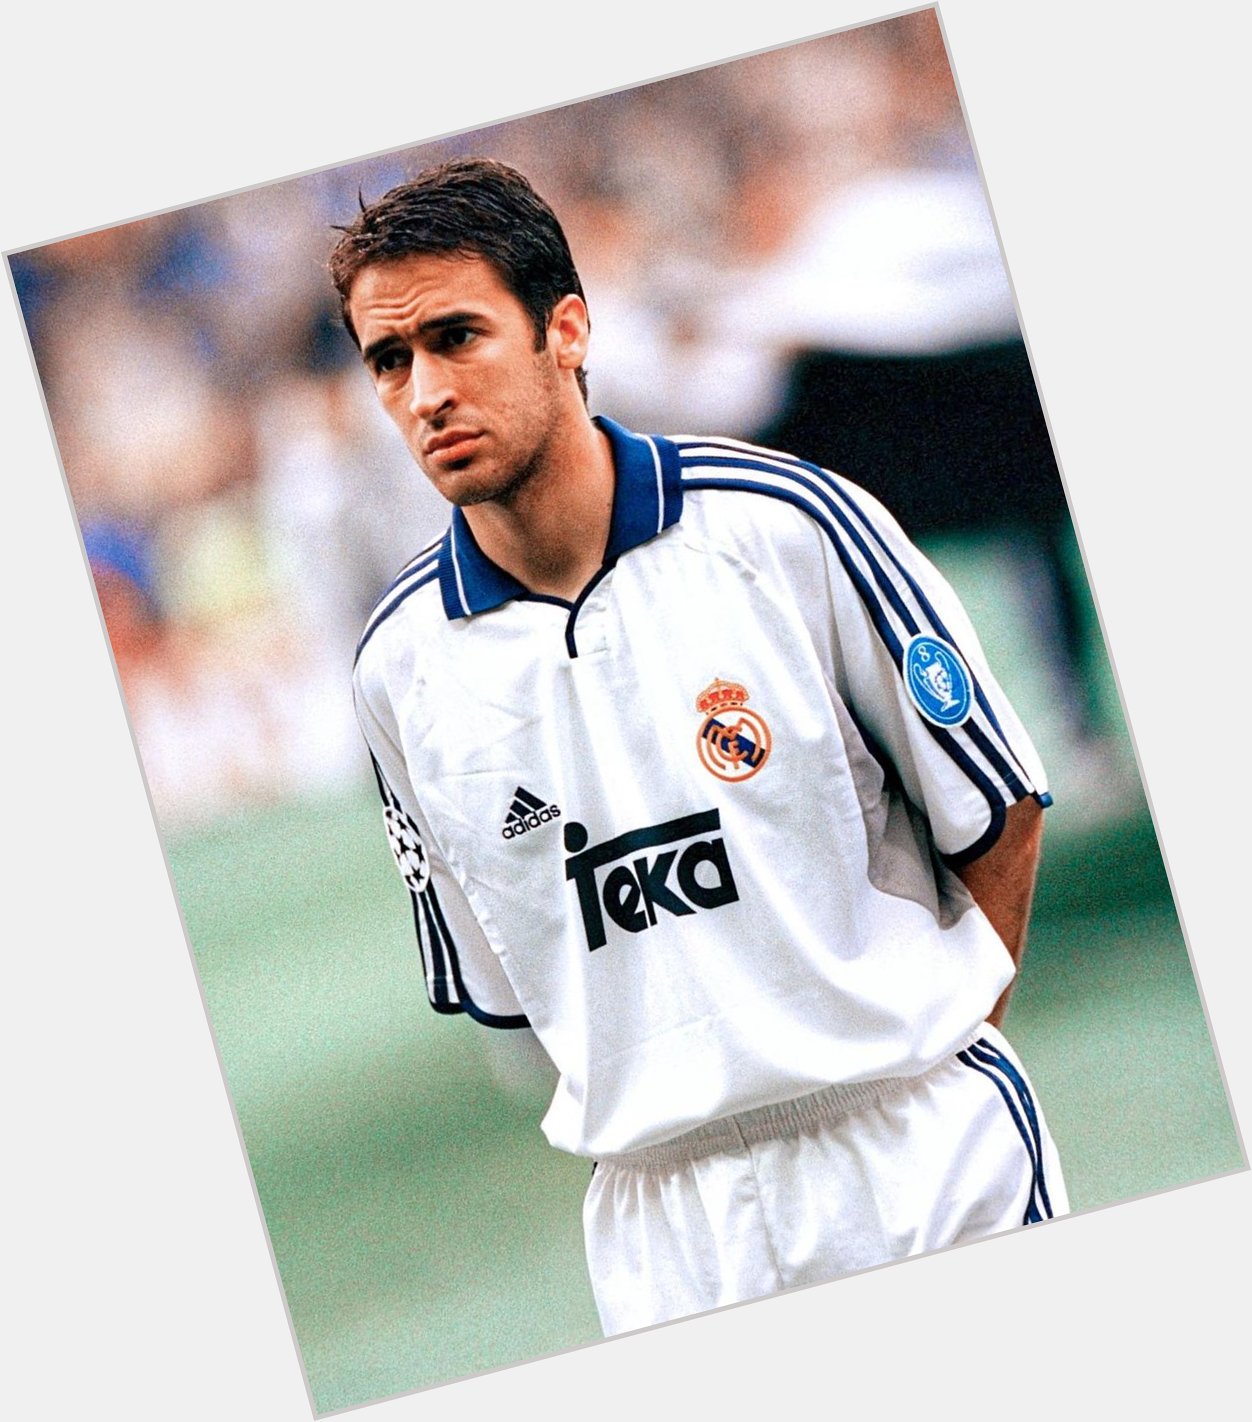 El Siete, The Angel Of Madrid, El Capitan, The Golden Boy Of Spain.

Happy birthday Raul Gonzalez Blanco 